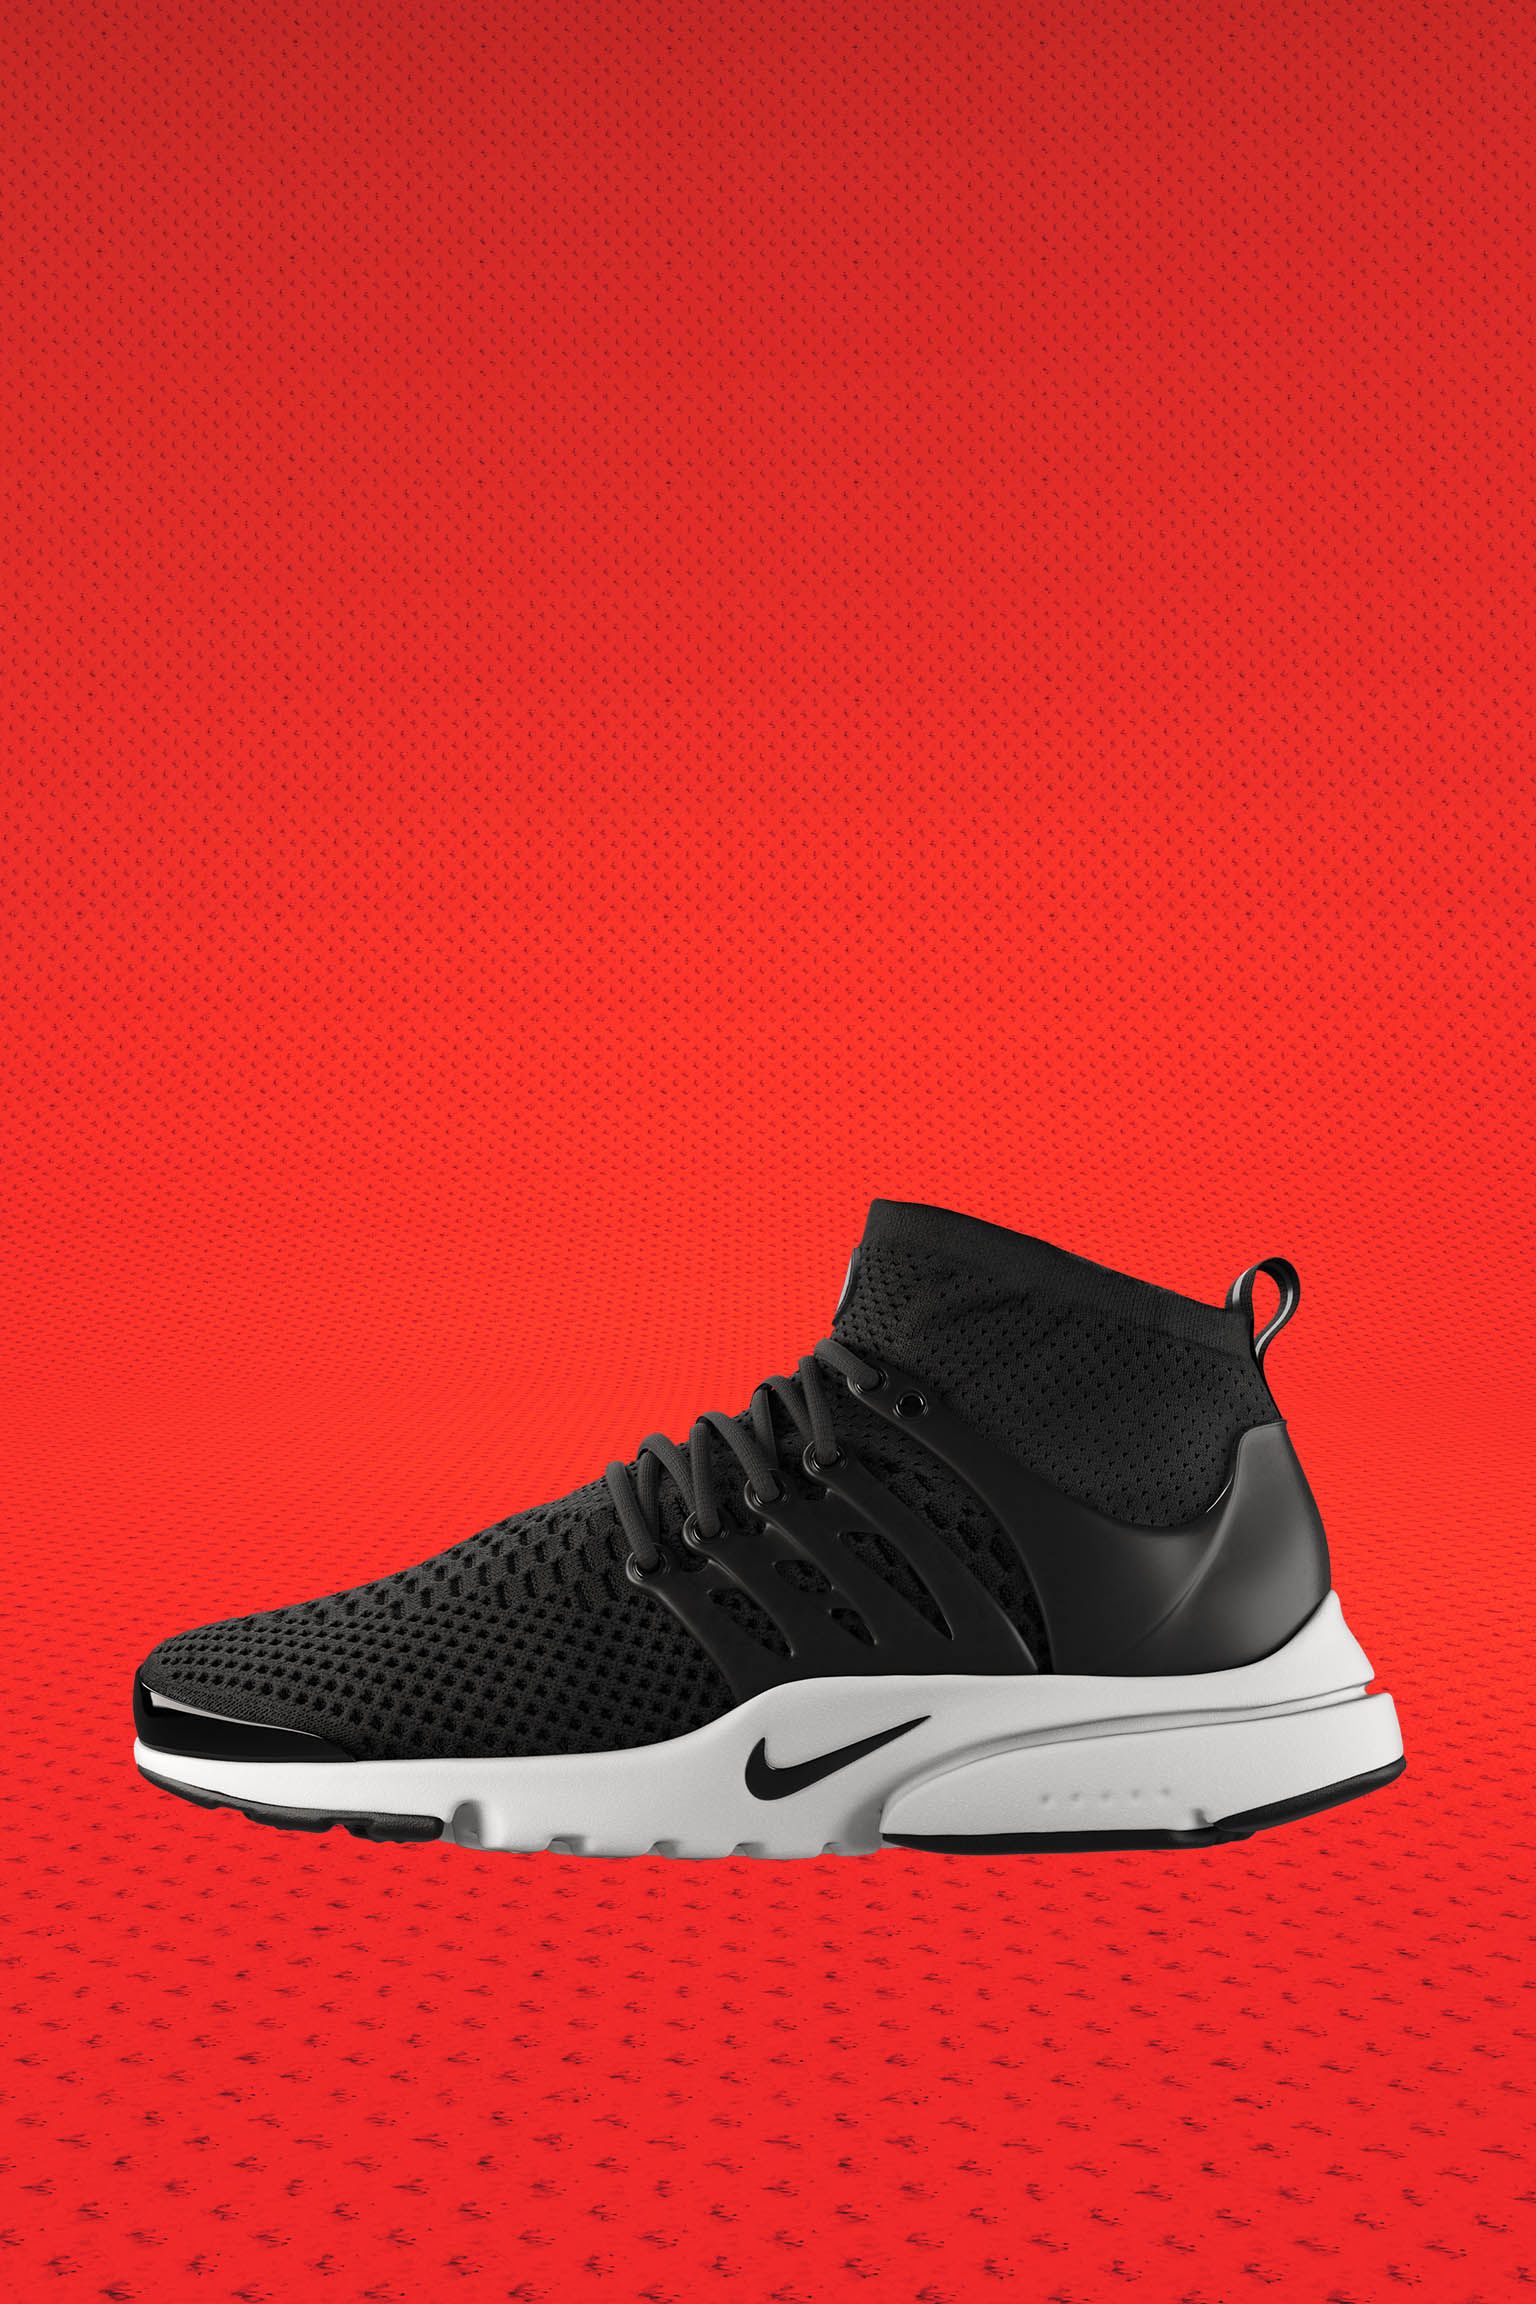 Nike Air Presto Ultra Flyknit 'Black & White' Release Date. Nike SNKRS صور لاسم مرام